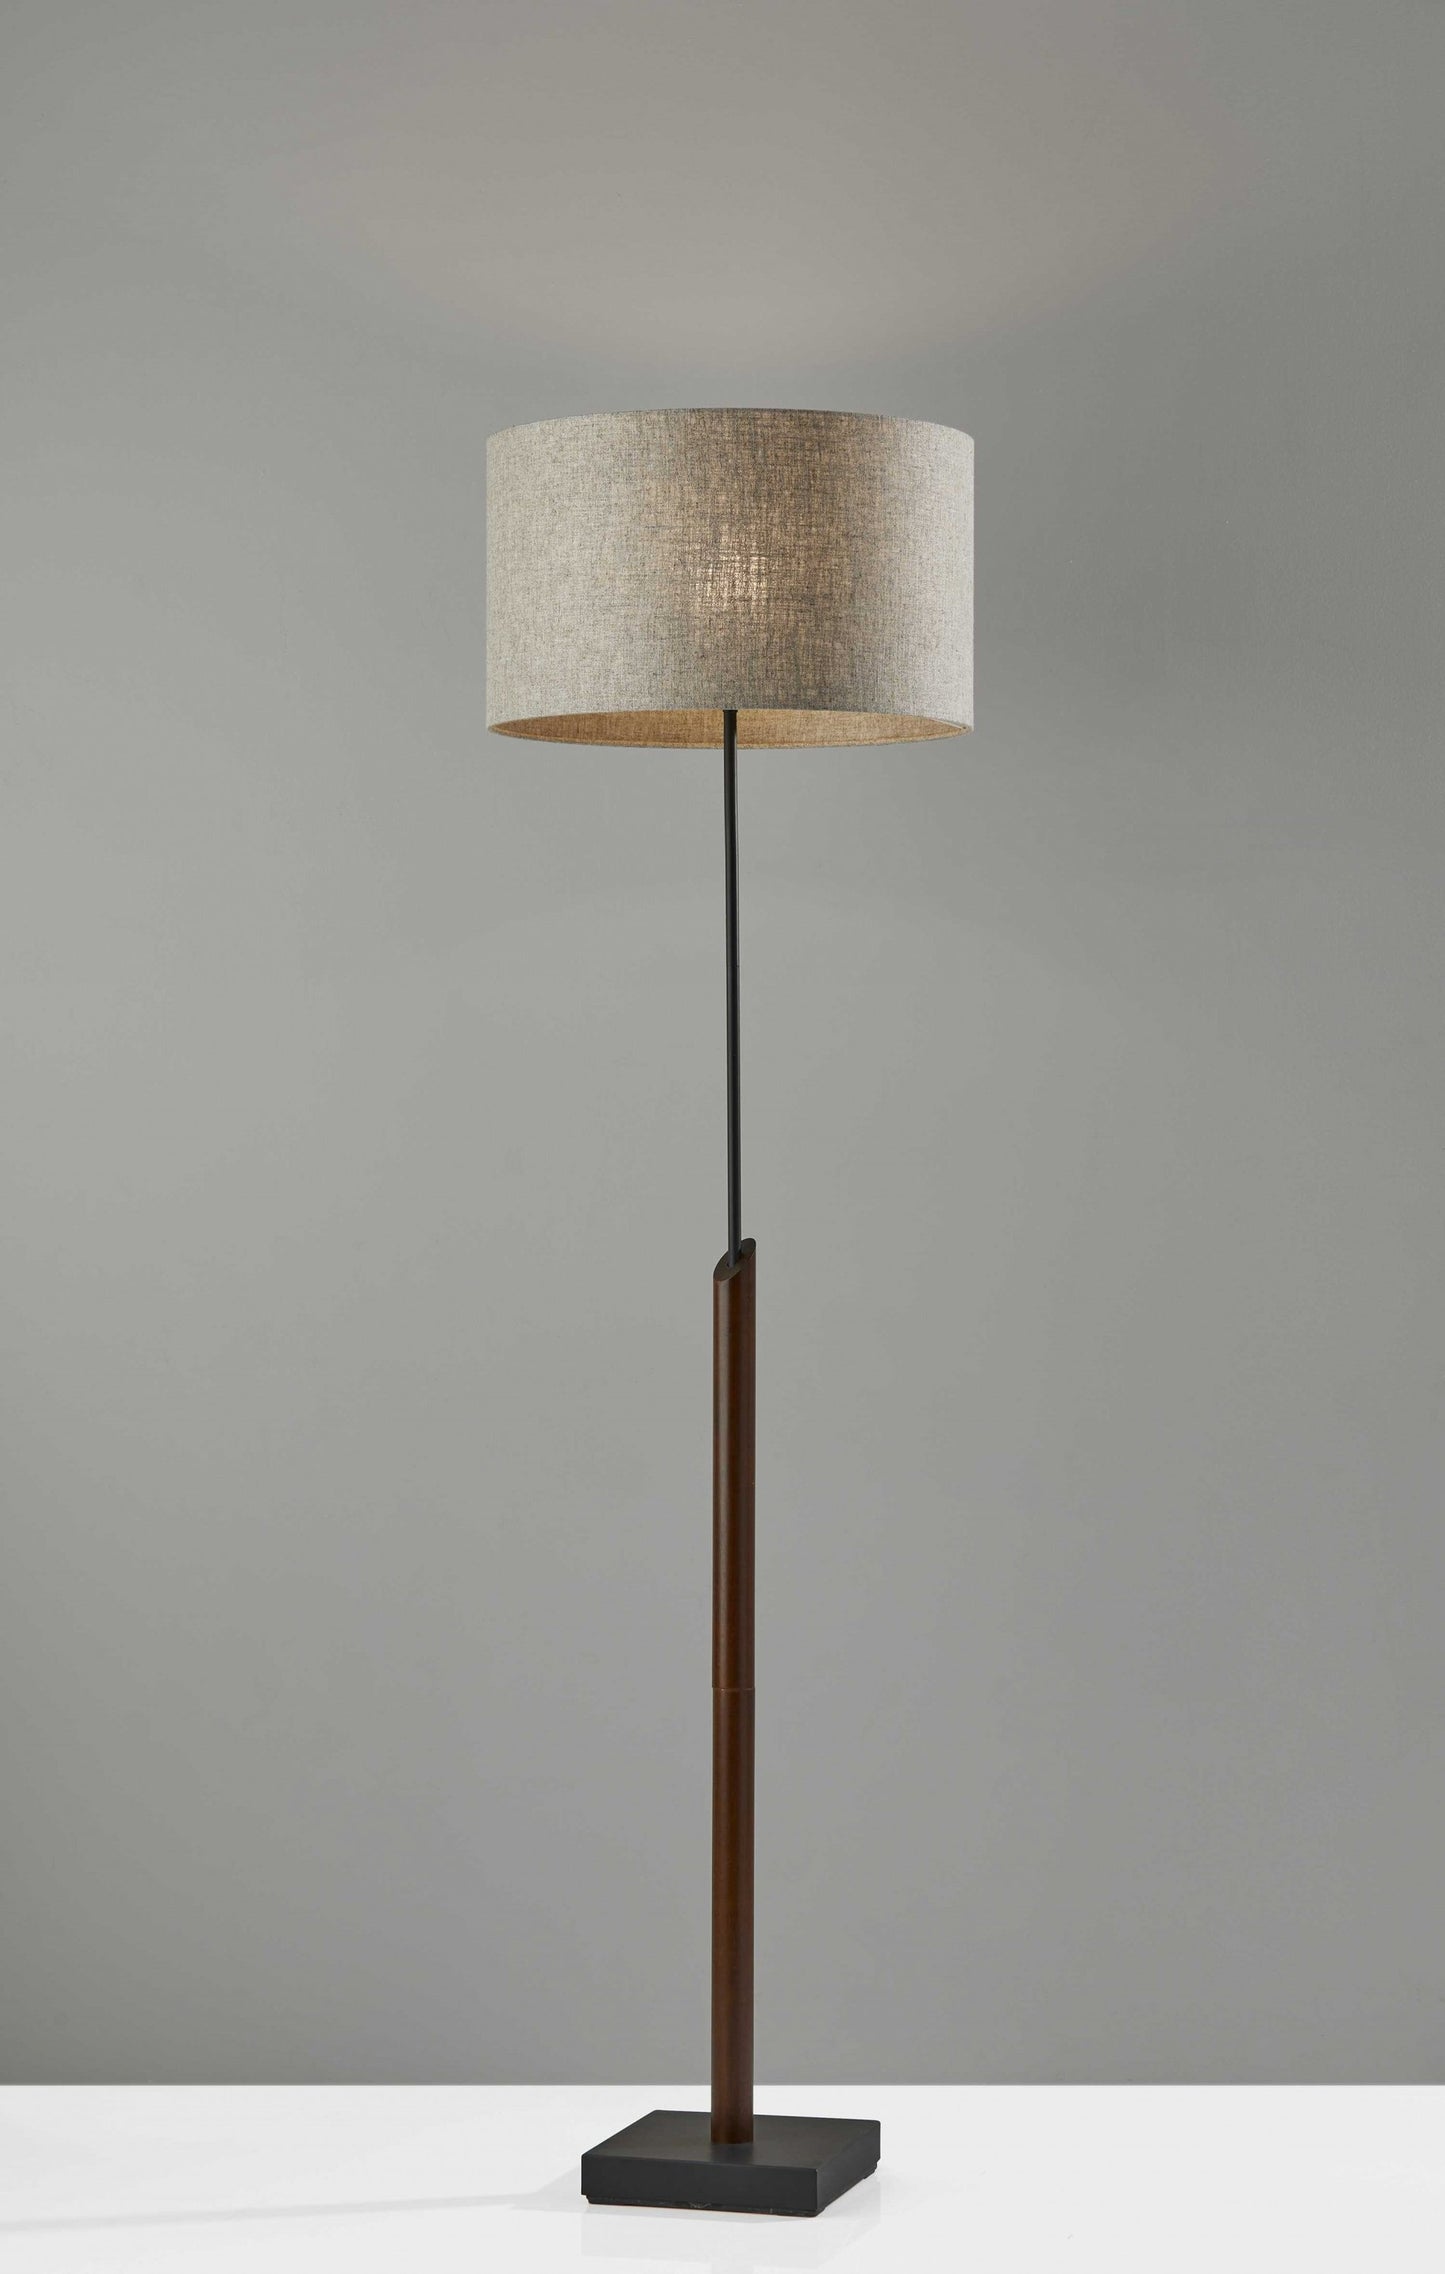 Sculptural Wood Floor Lamp with Black Metal Accents